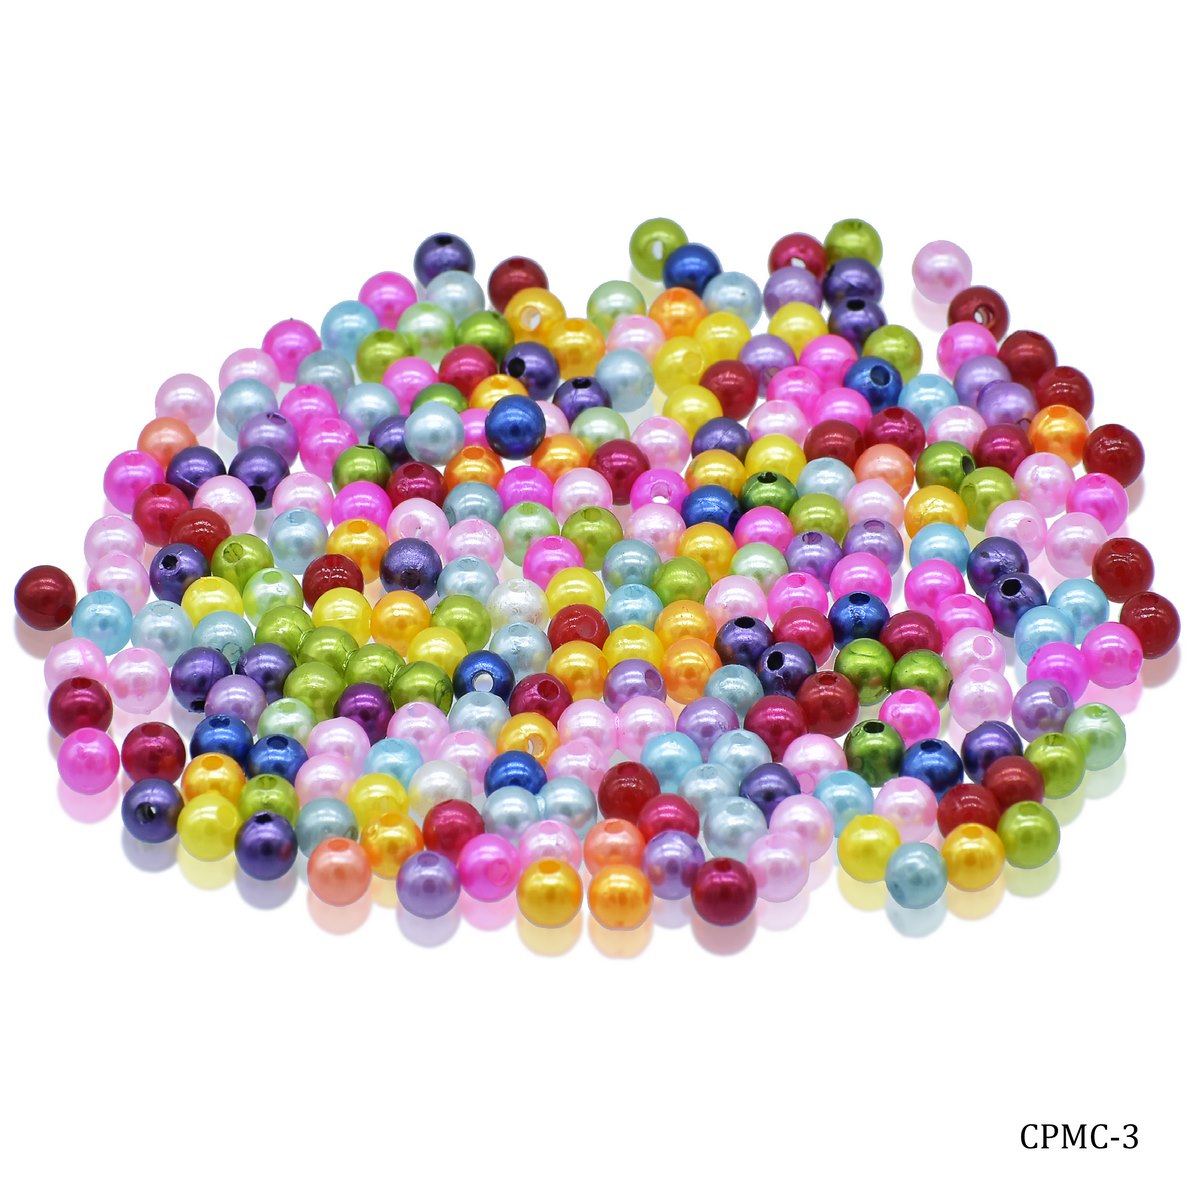 jags-mumbai Beads Jags Craft Beads Multi Colour 25gm 8MM CPMC-3